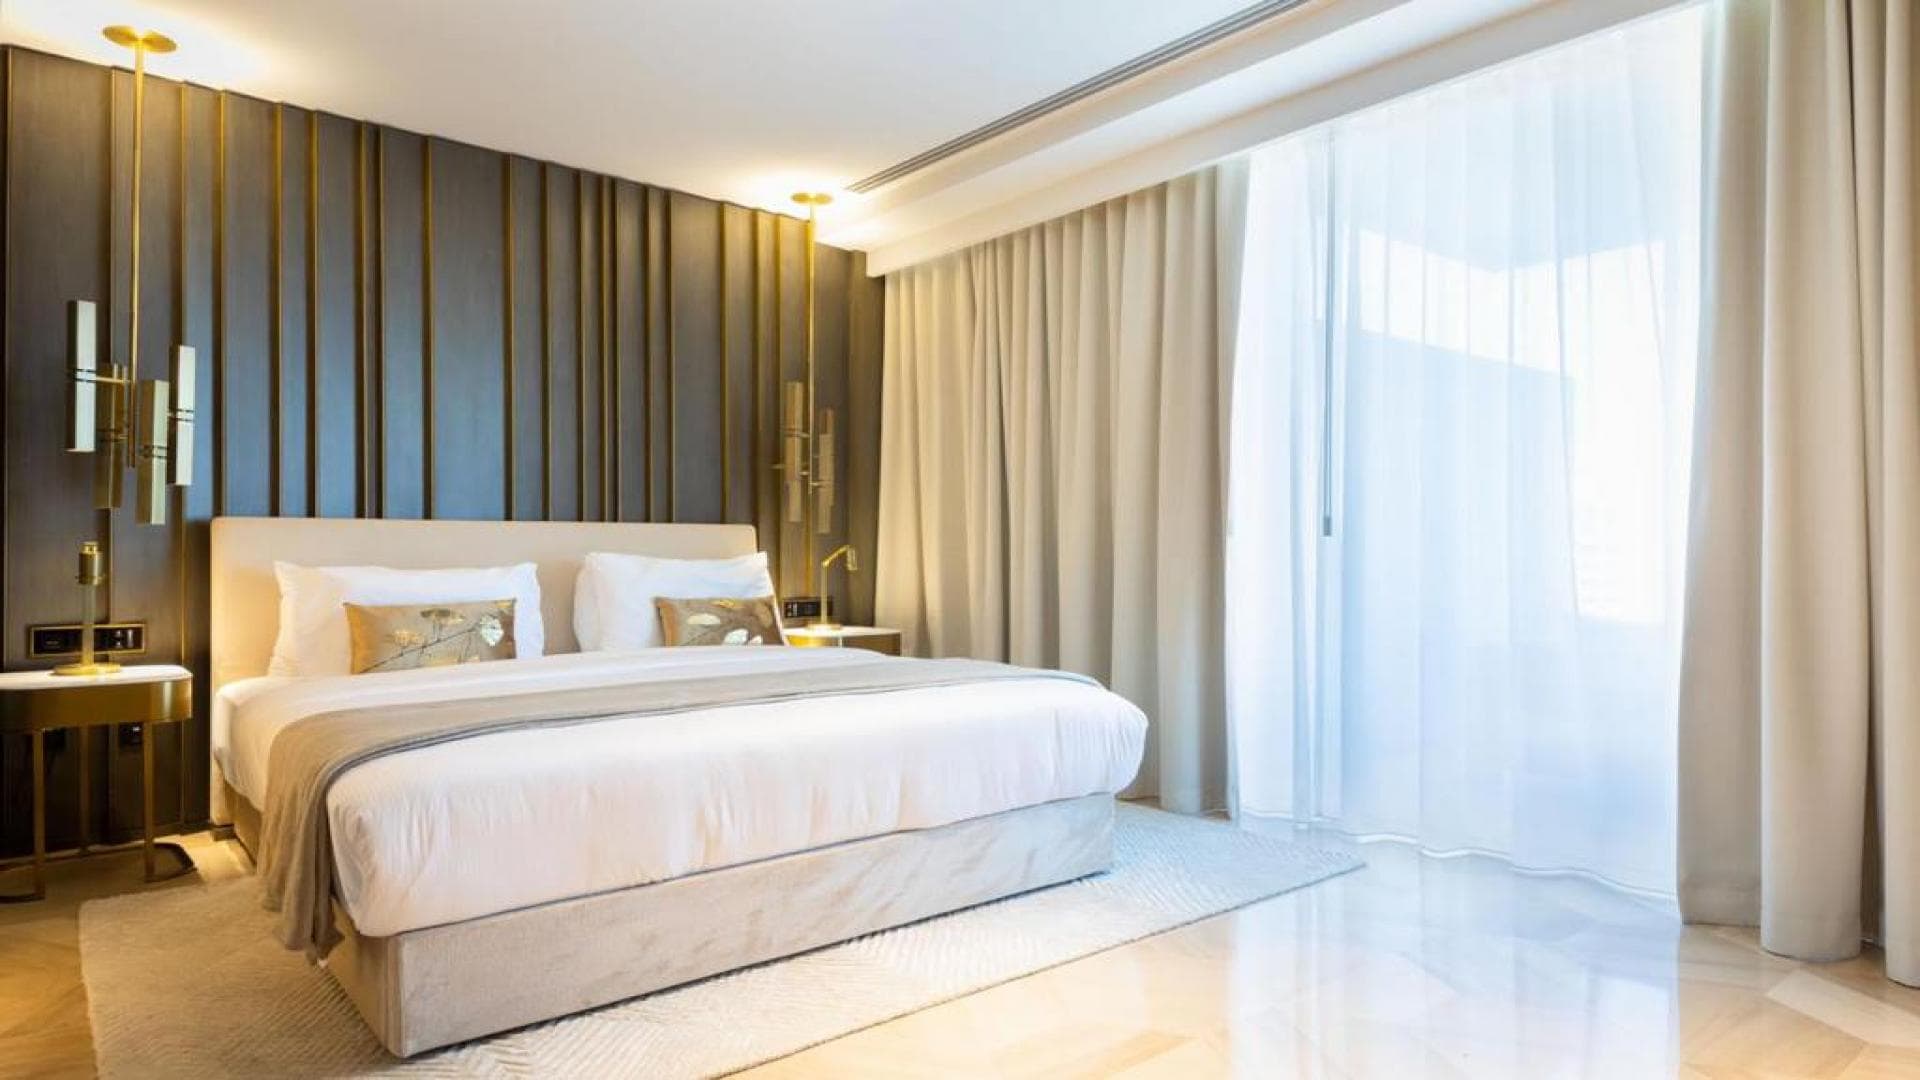 2 Bedroom Apartment For Sale Al Thamam 43 Lp36091 16523ef9b151d800.jpg